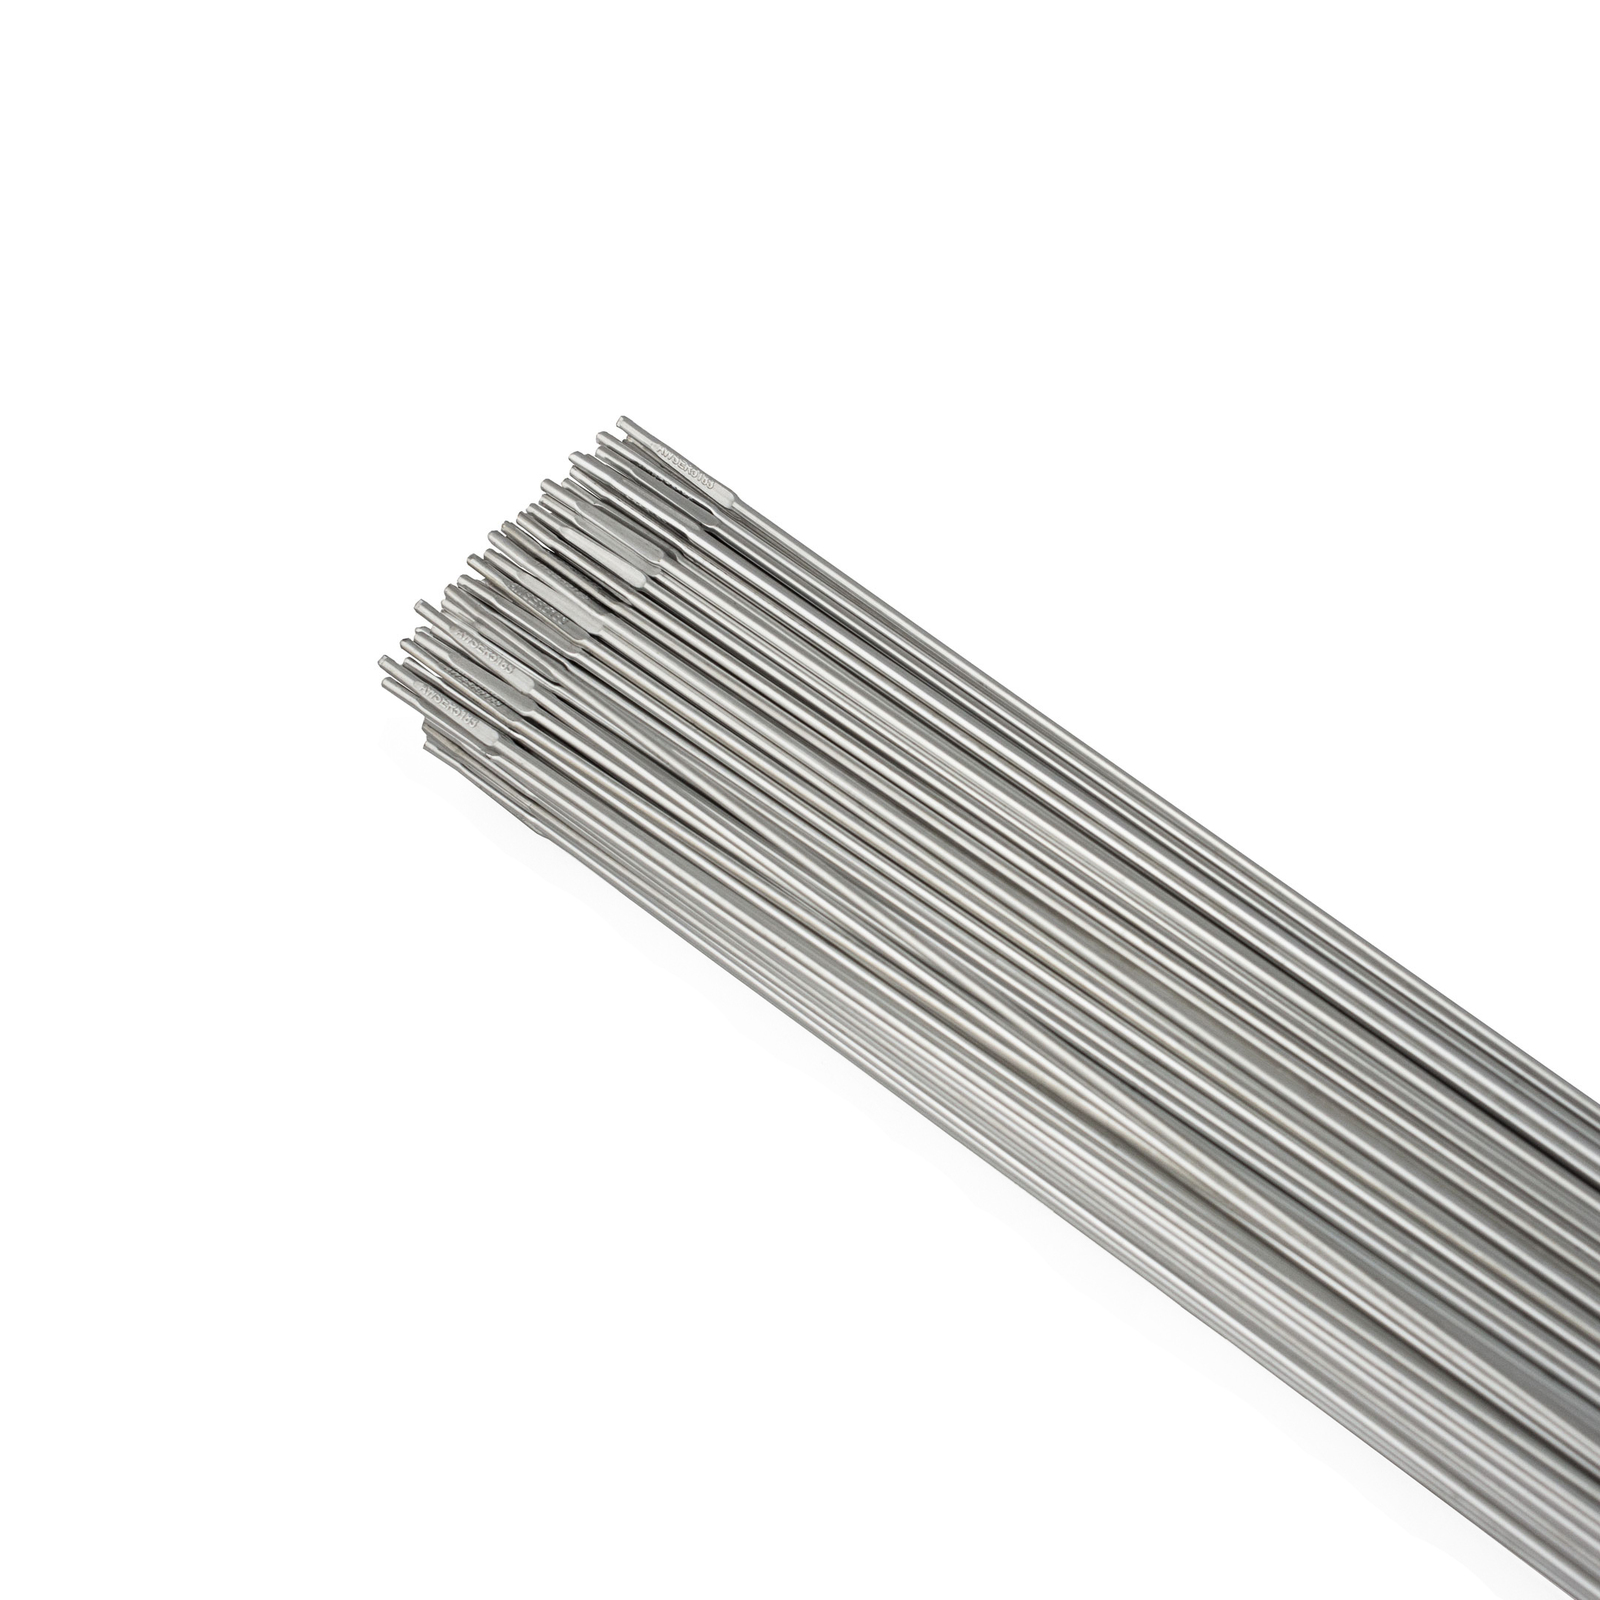 2.4mm ER 5183 Aluminium TIG Filler Rods 1kg - Welding Wire - Aluminum ...